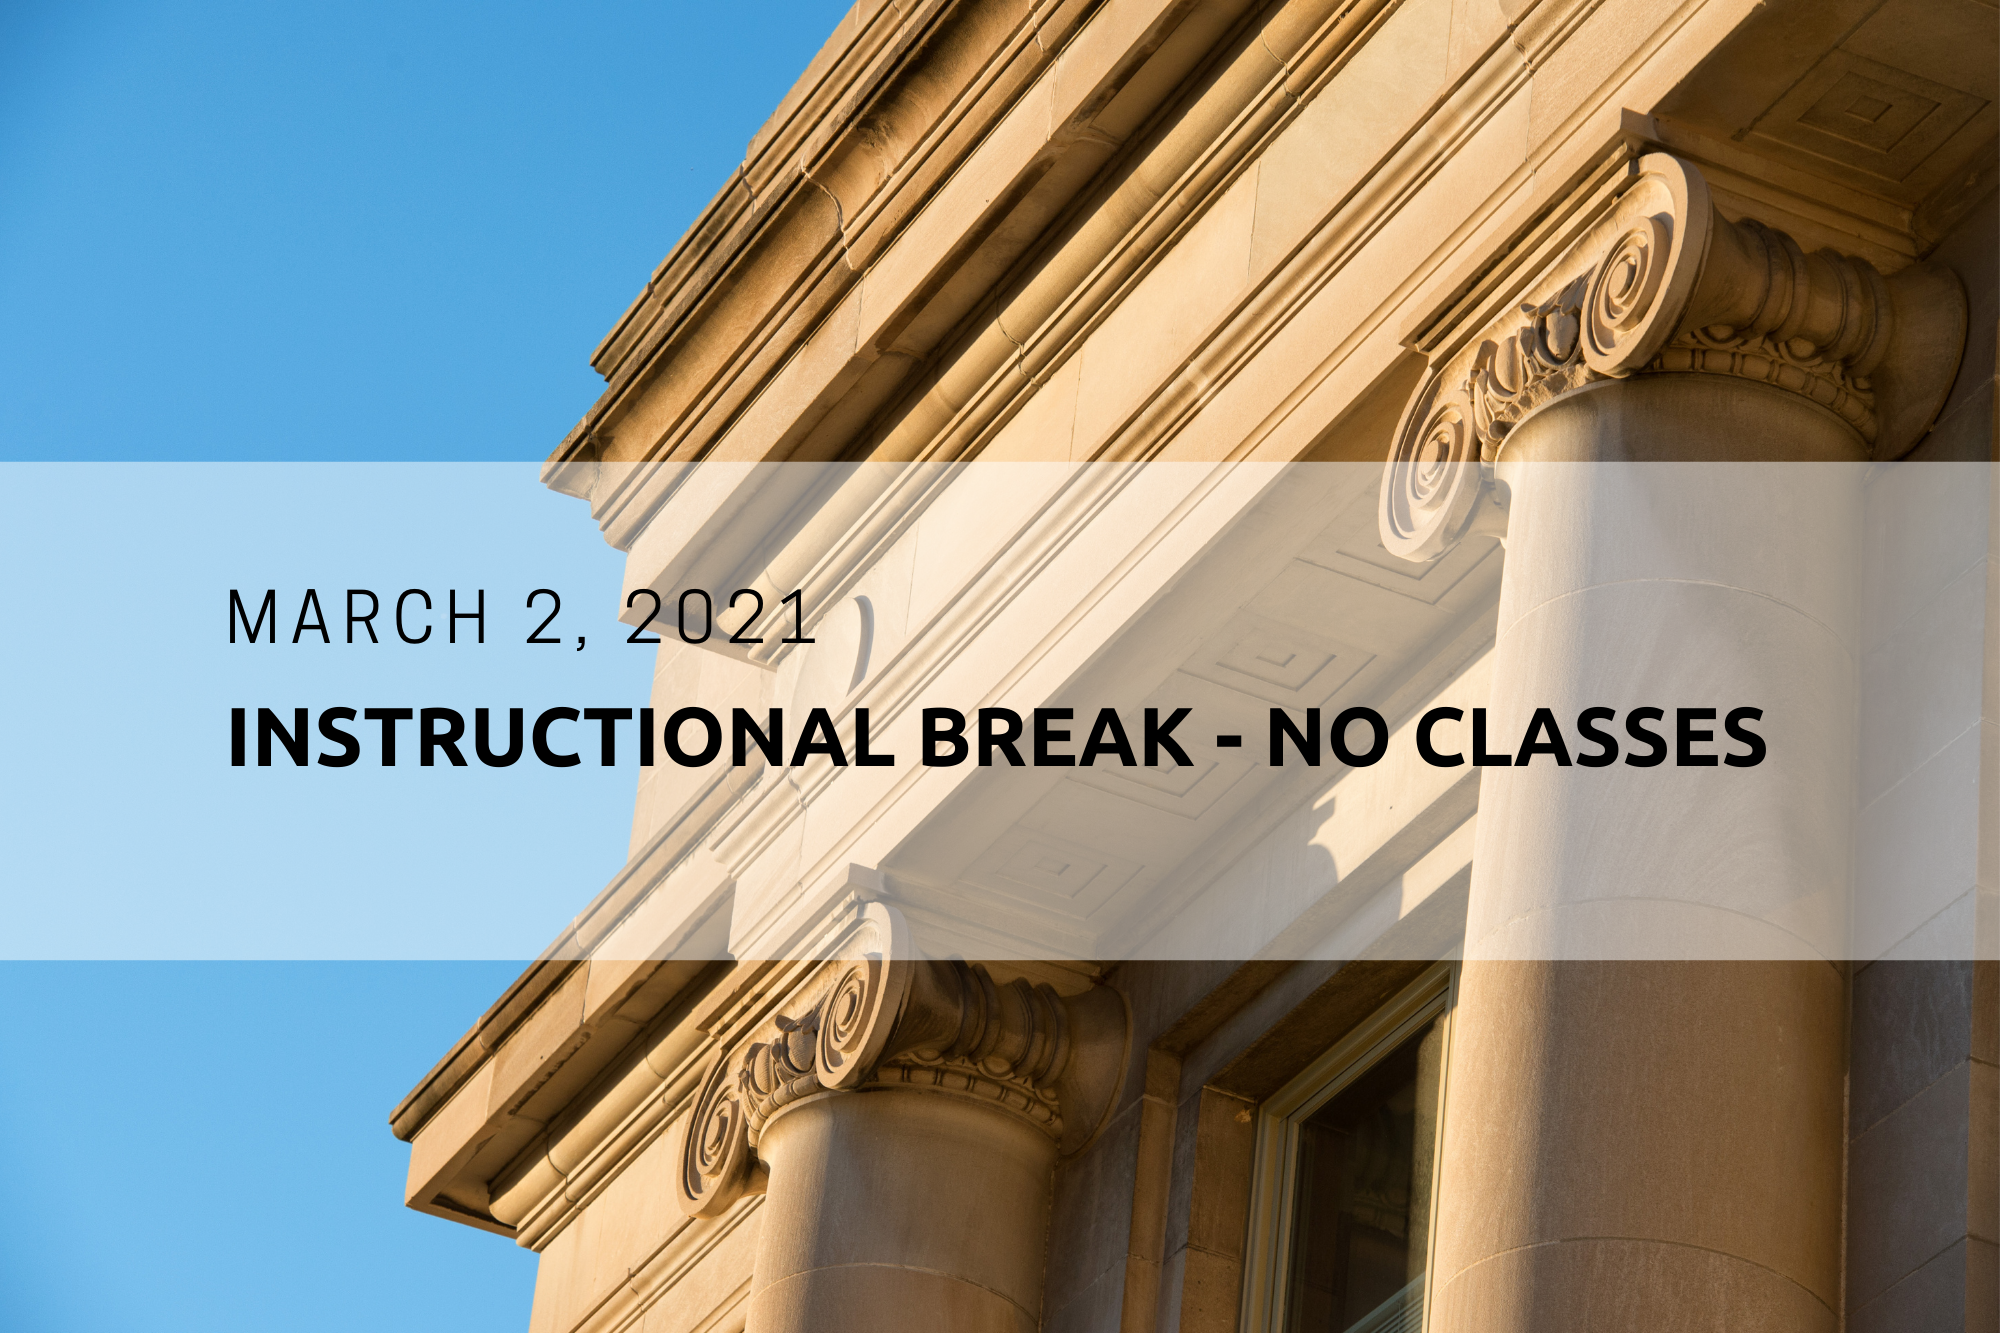 Instructional Break - No classes